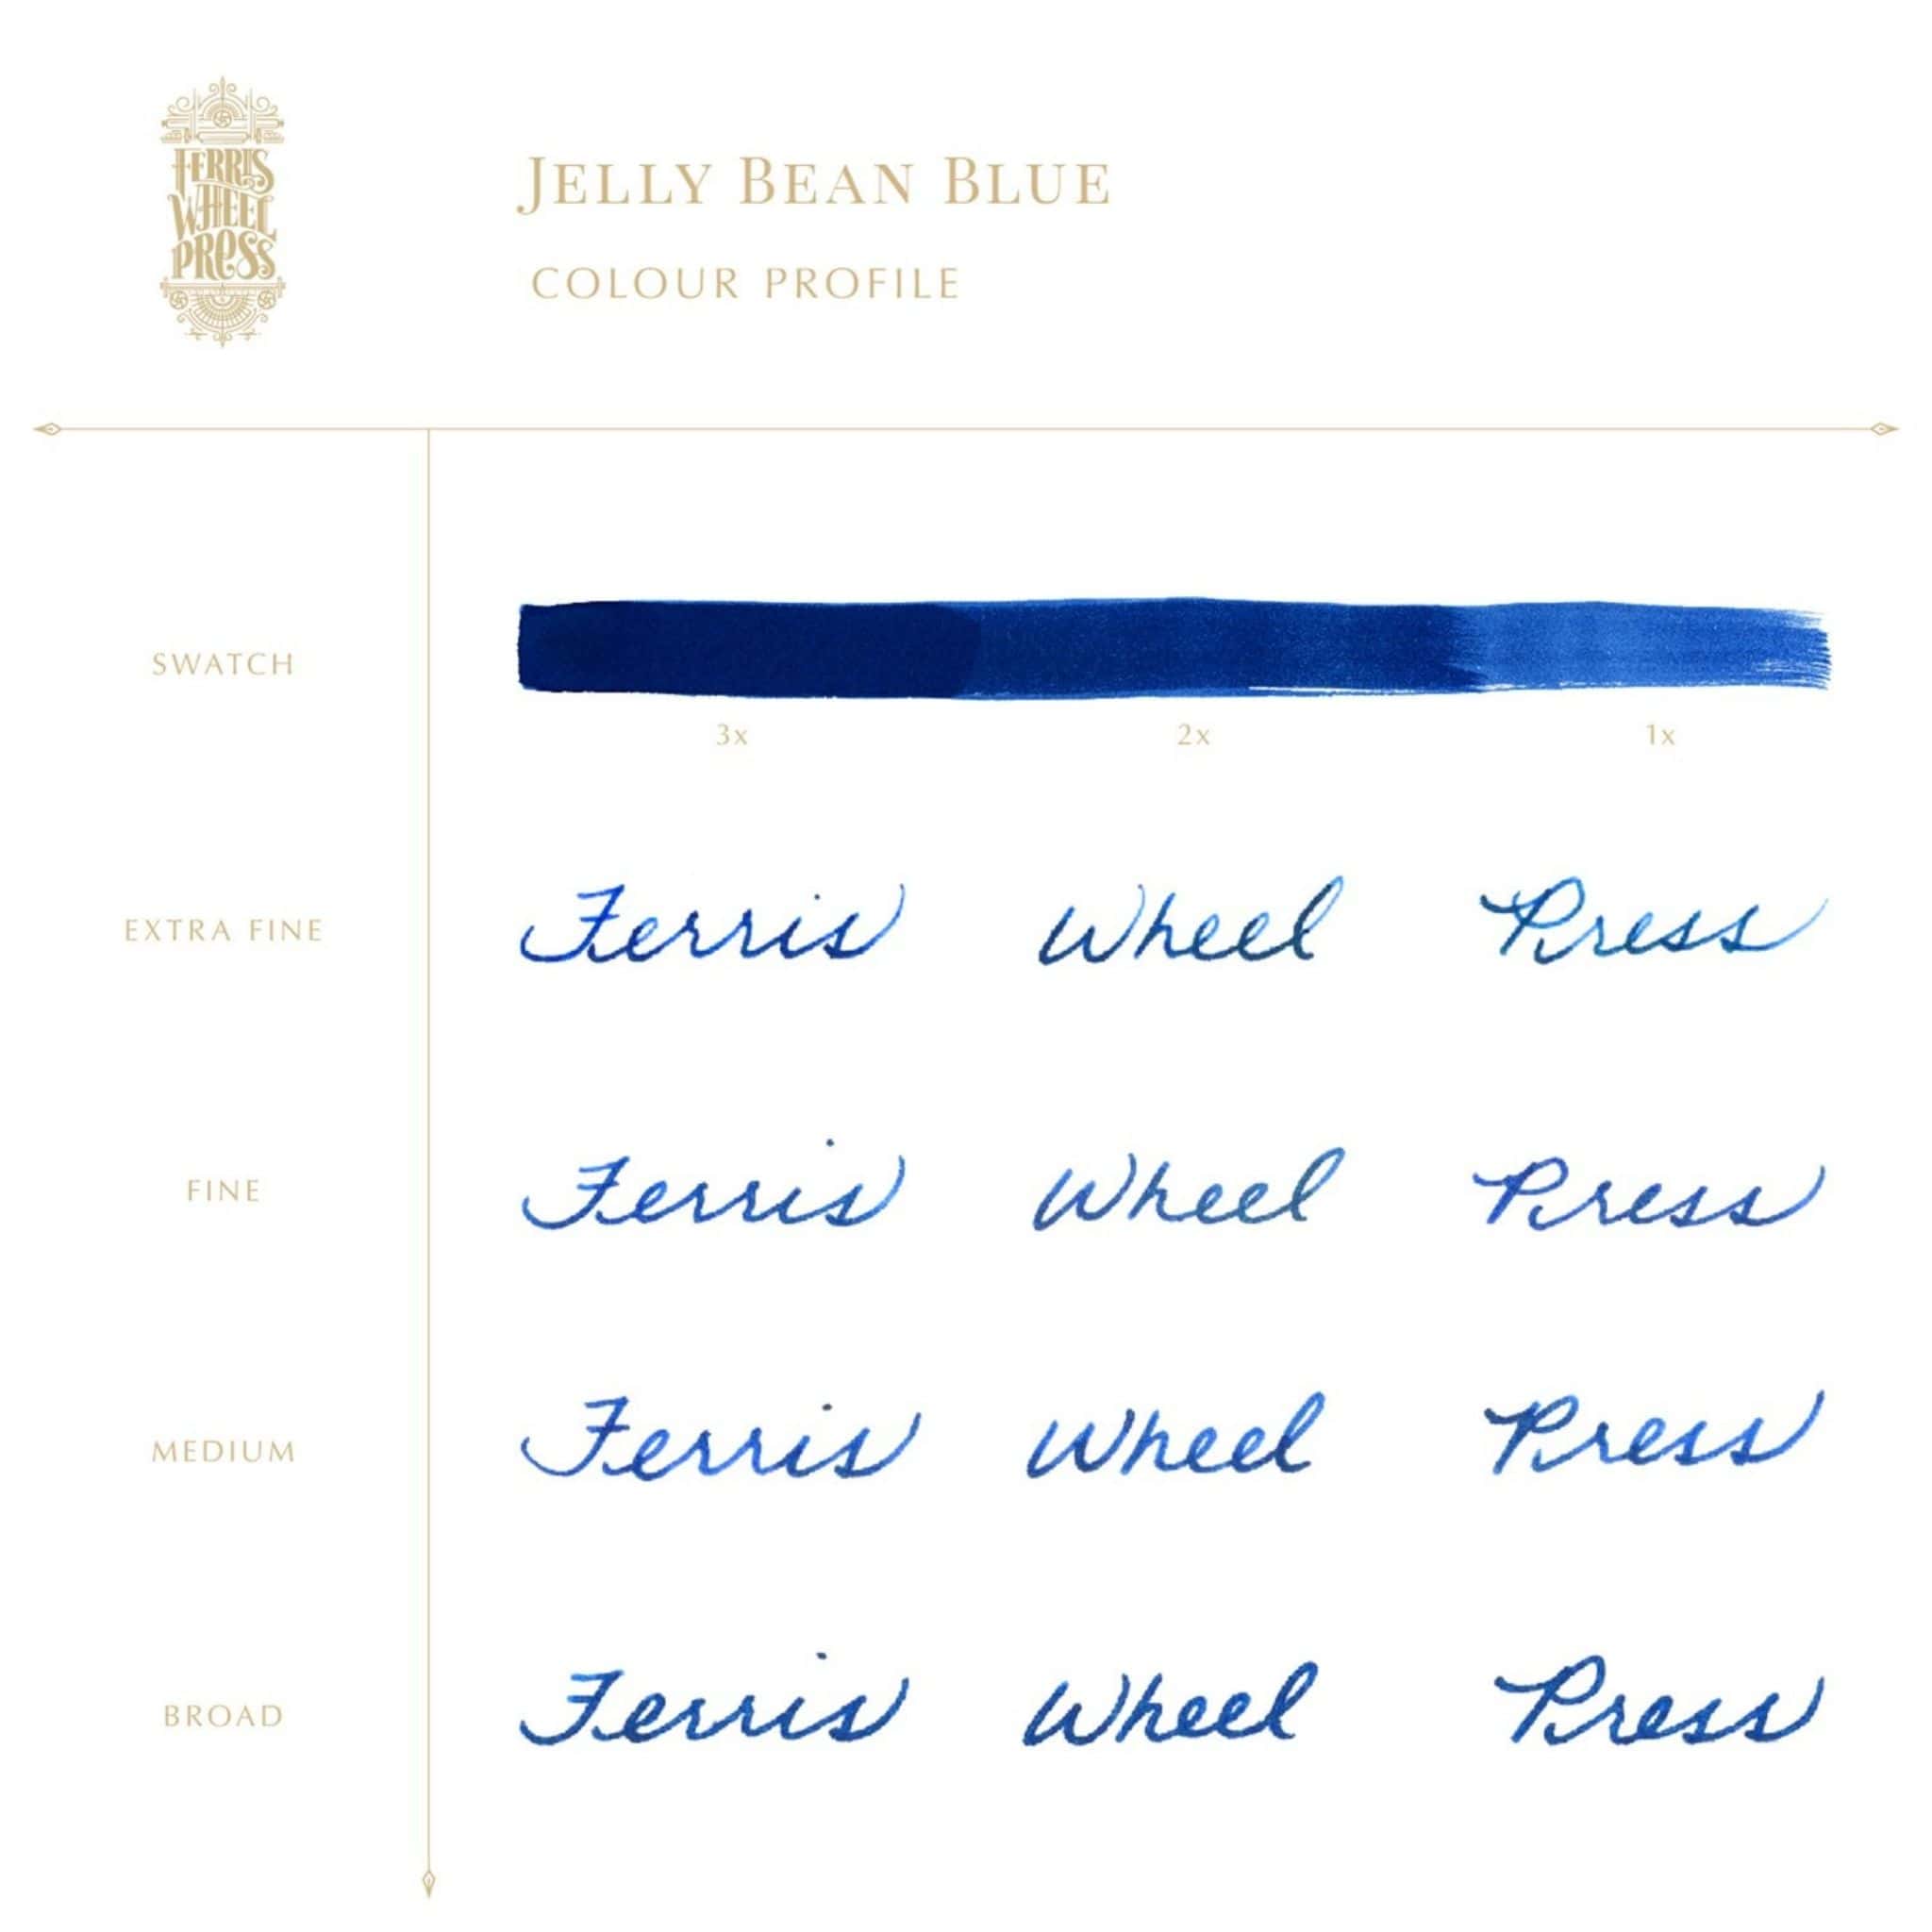 Ferris Wheel Press 38ml Jelly Bean Blue Ink writing samples - Paper Kooka